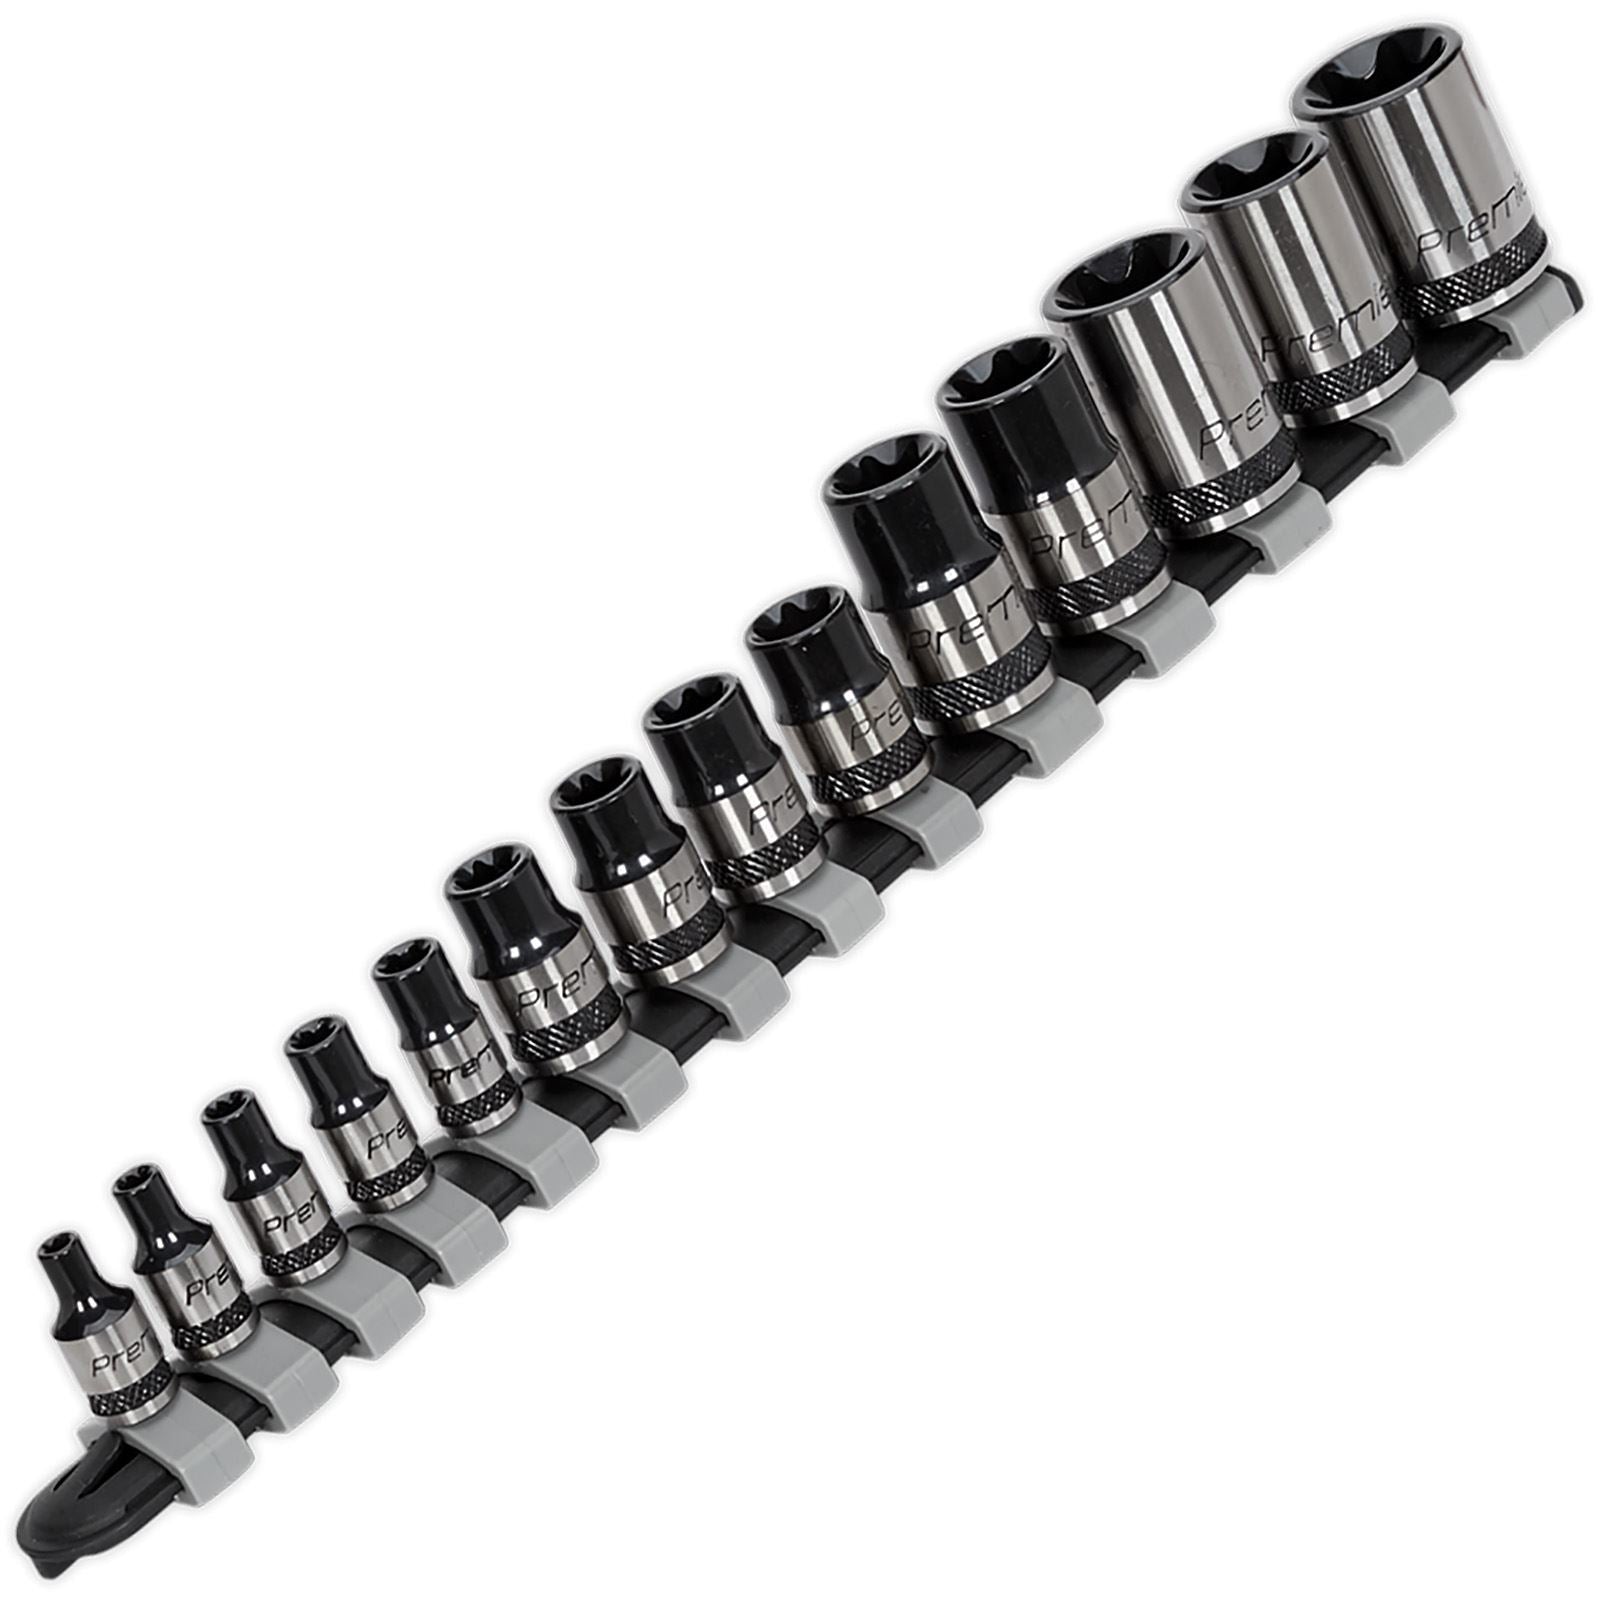 Sealey Premier Black 14 Piece 1/4" 3/8" 1/2" Drive Trx-Star Socket Set E4-E24